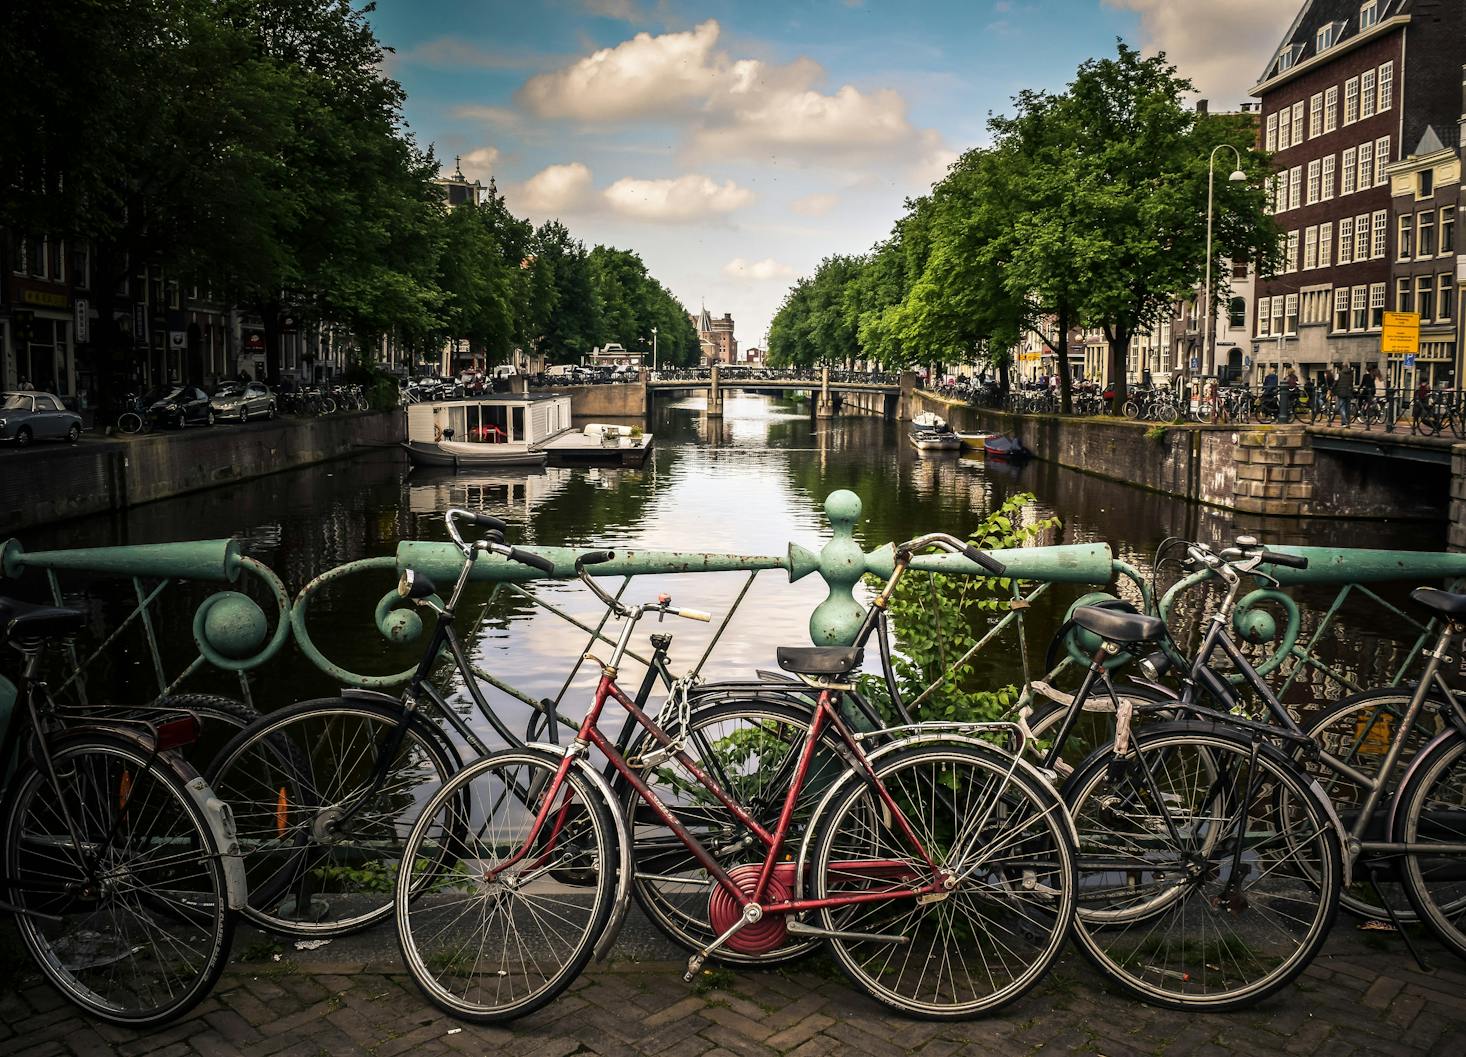 Amsterdam on a budget